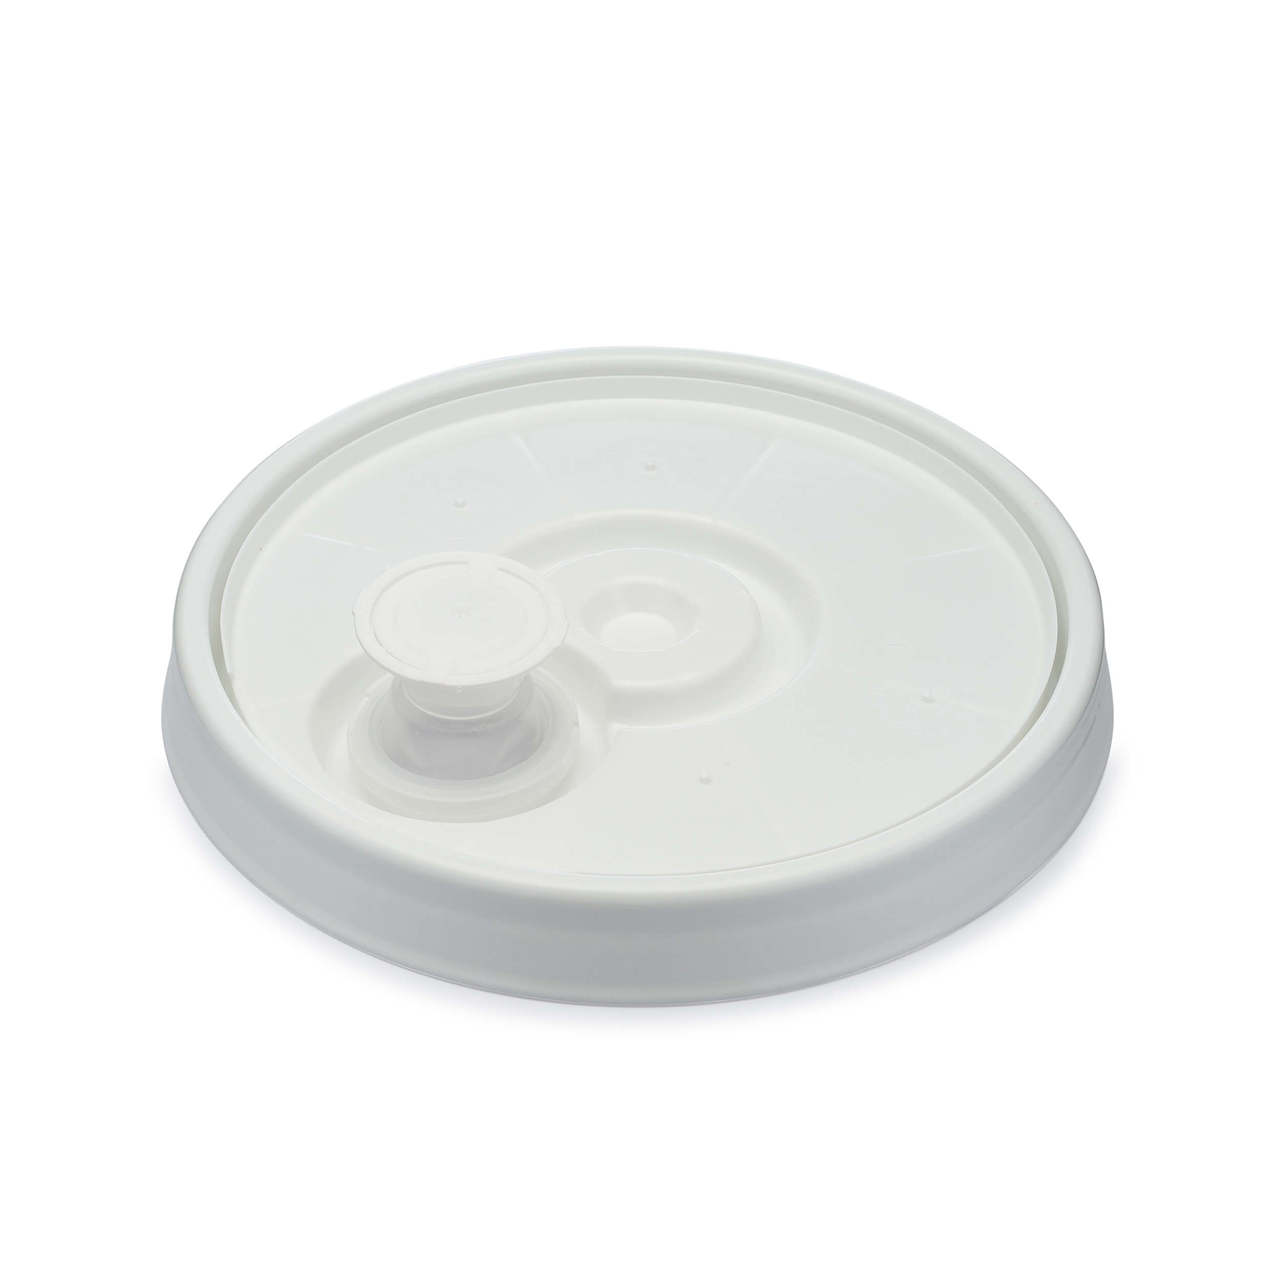 5gal White HDPE Plastic 90ml Buckets (EZ Lid & Spout) - White